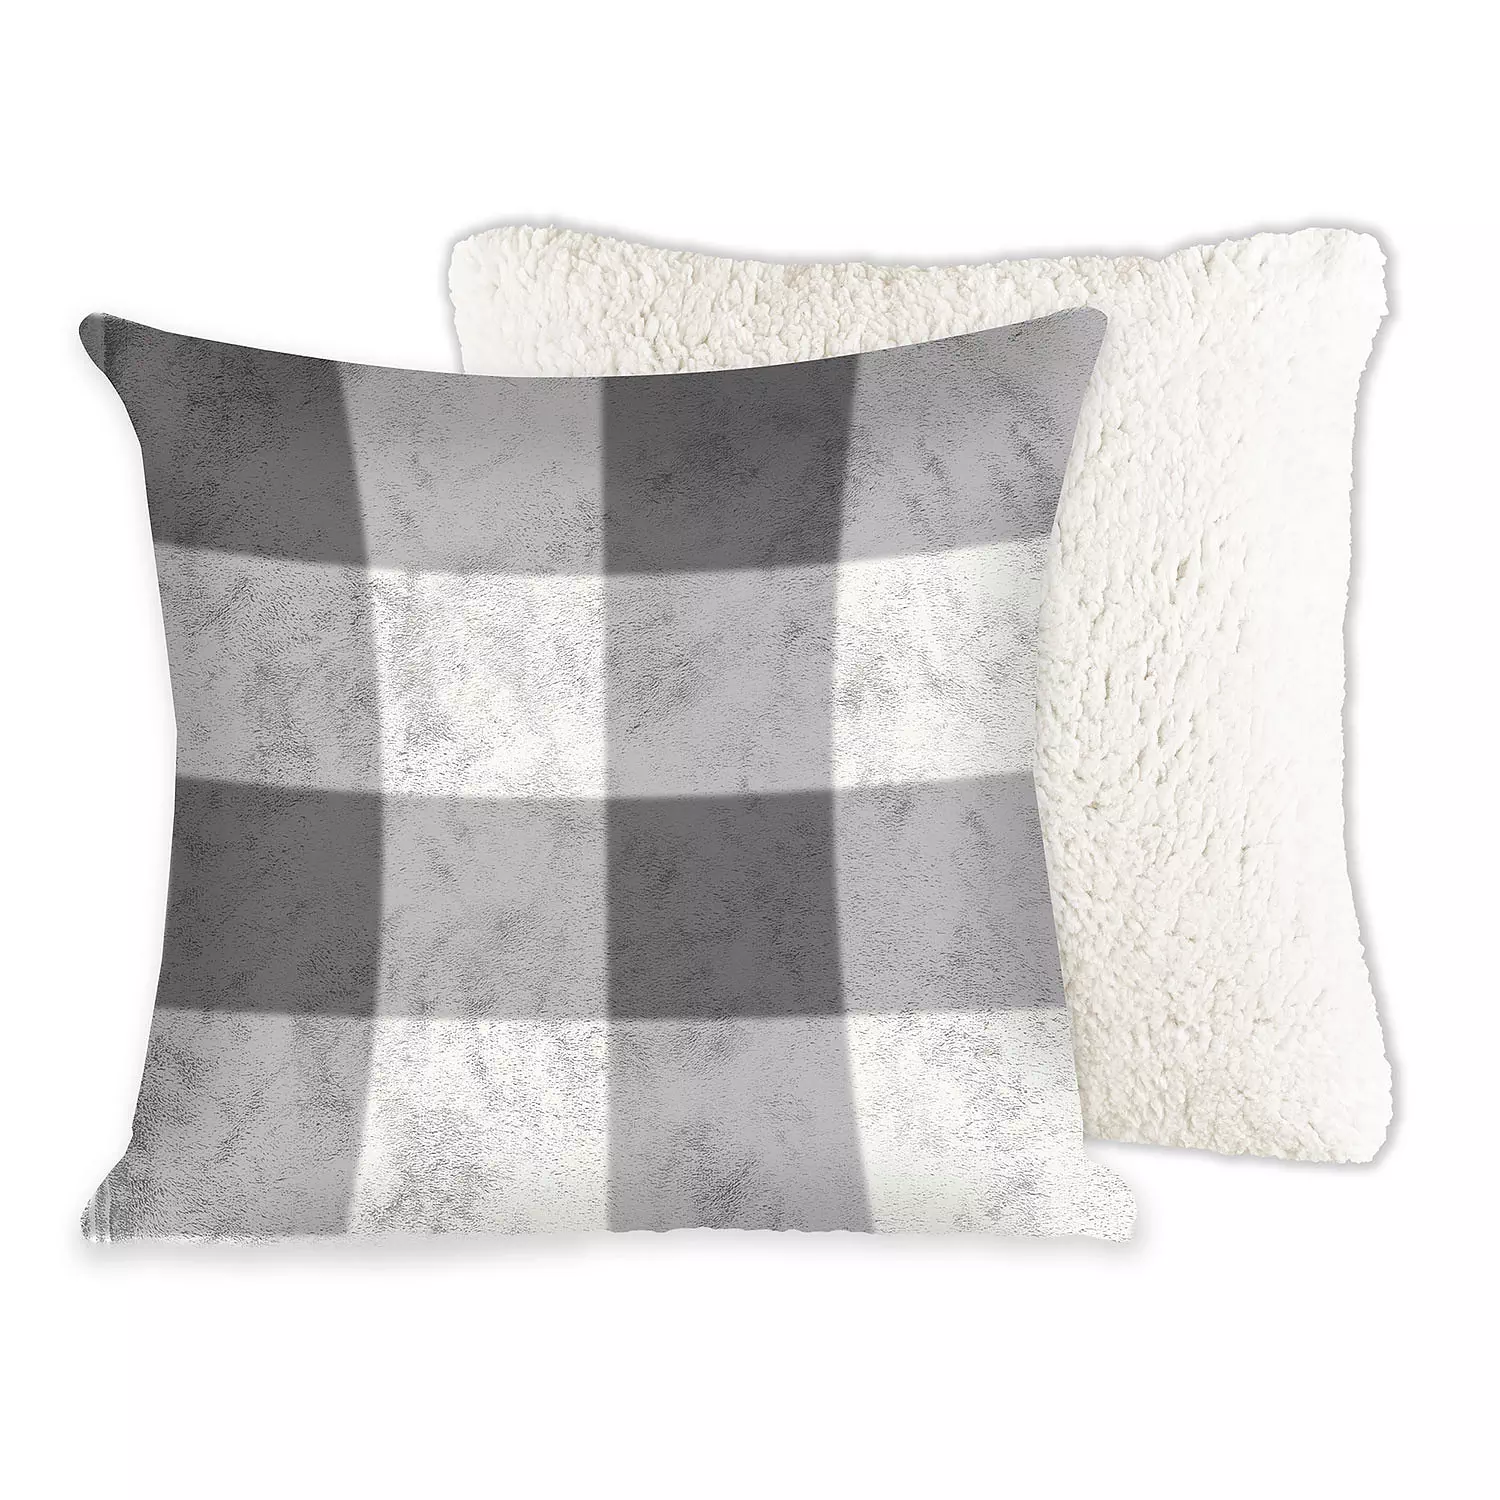 Grey buffalo plaid decorative cushion with sherpa back, 17"x17"